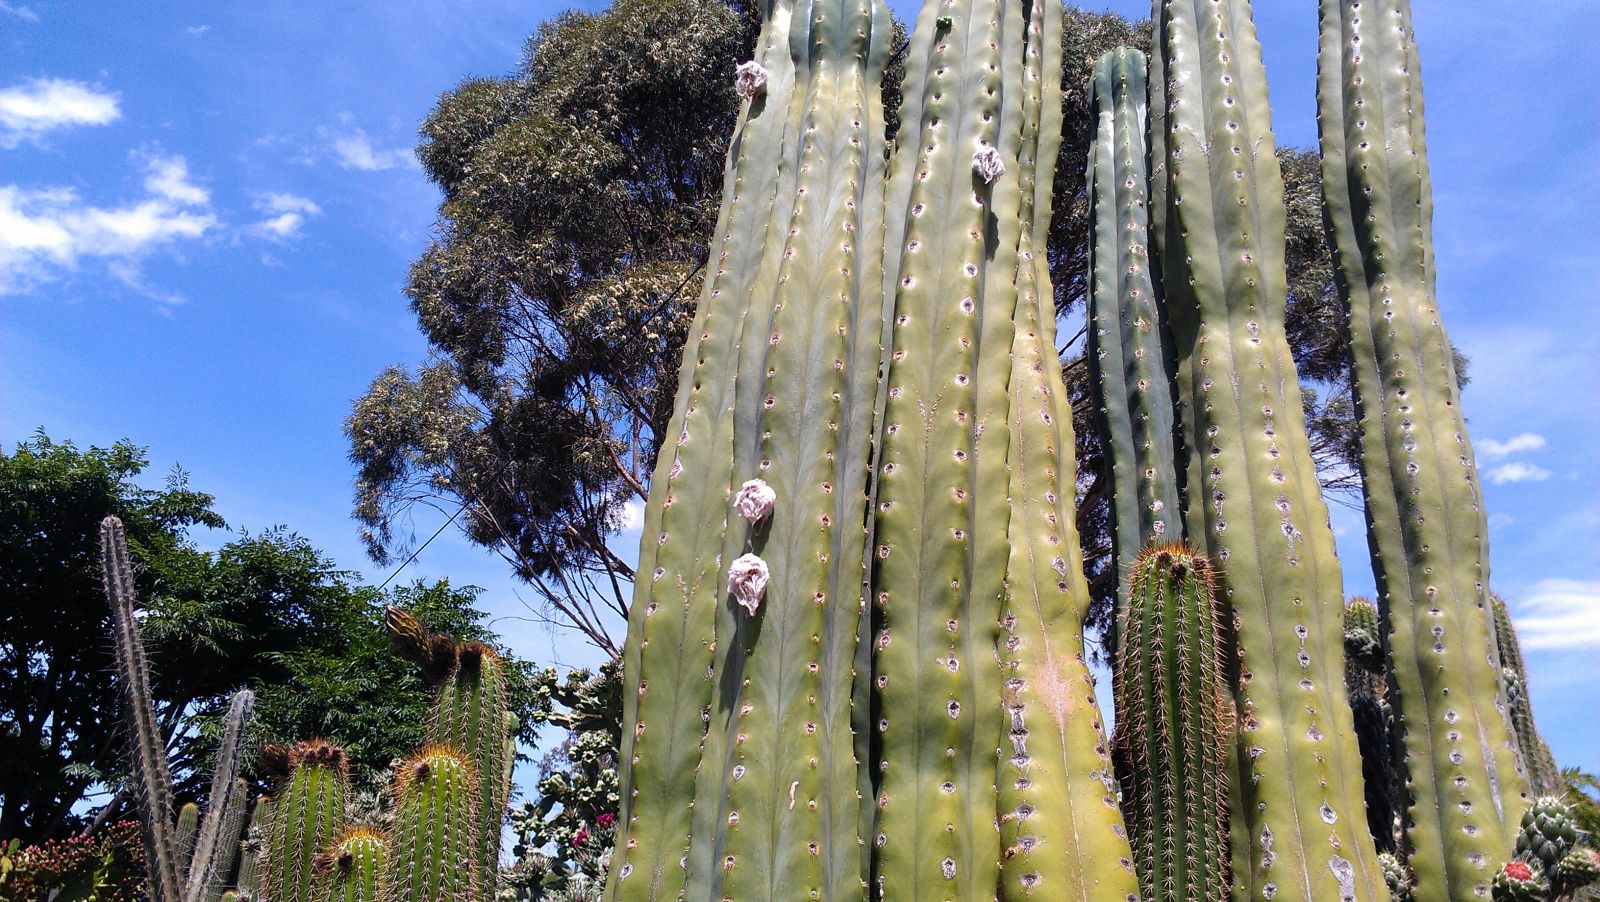 Established cactus garden in rural victoria